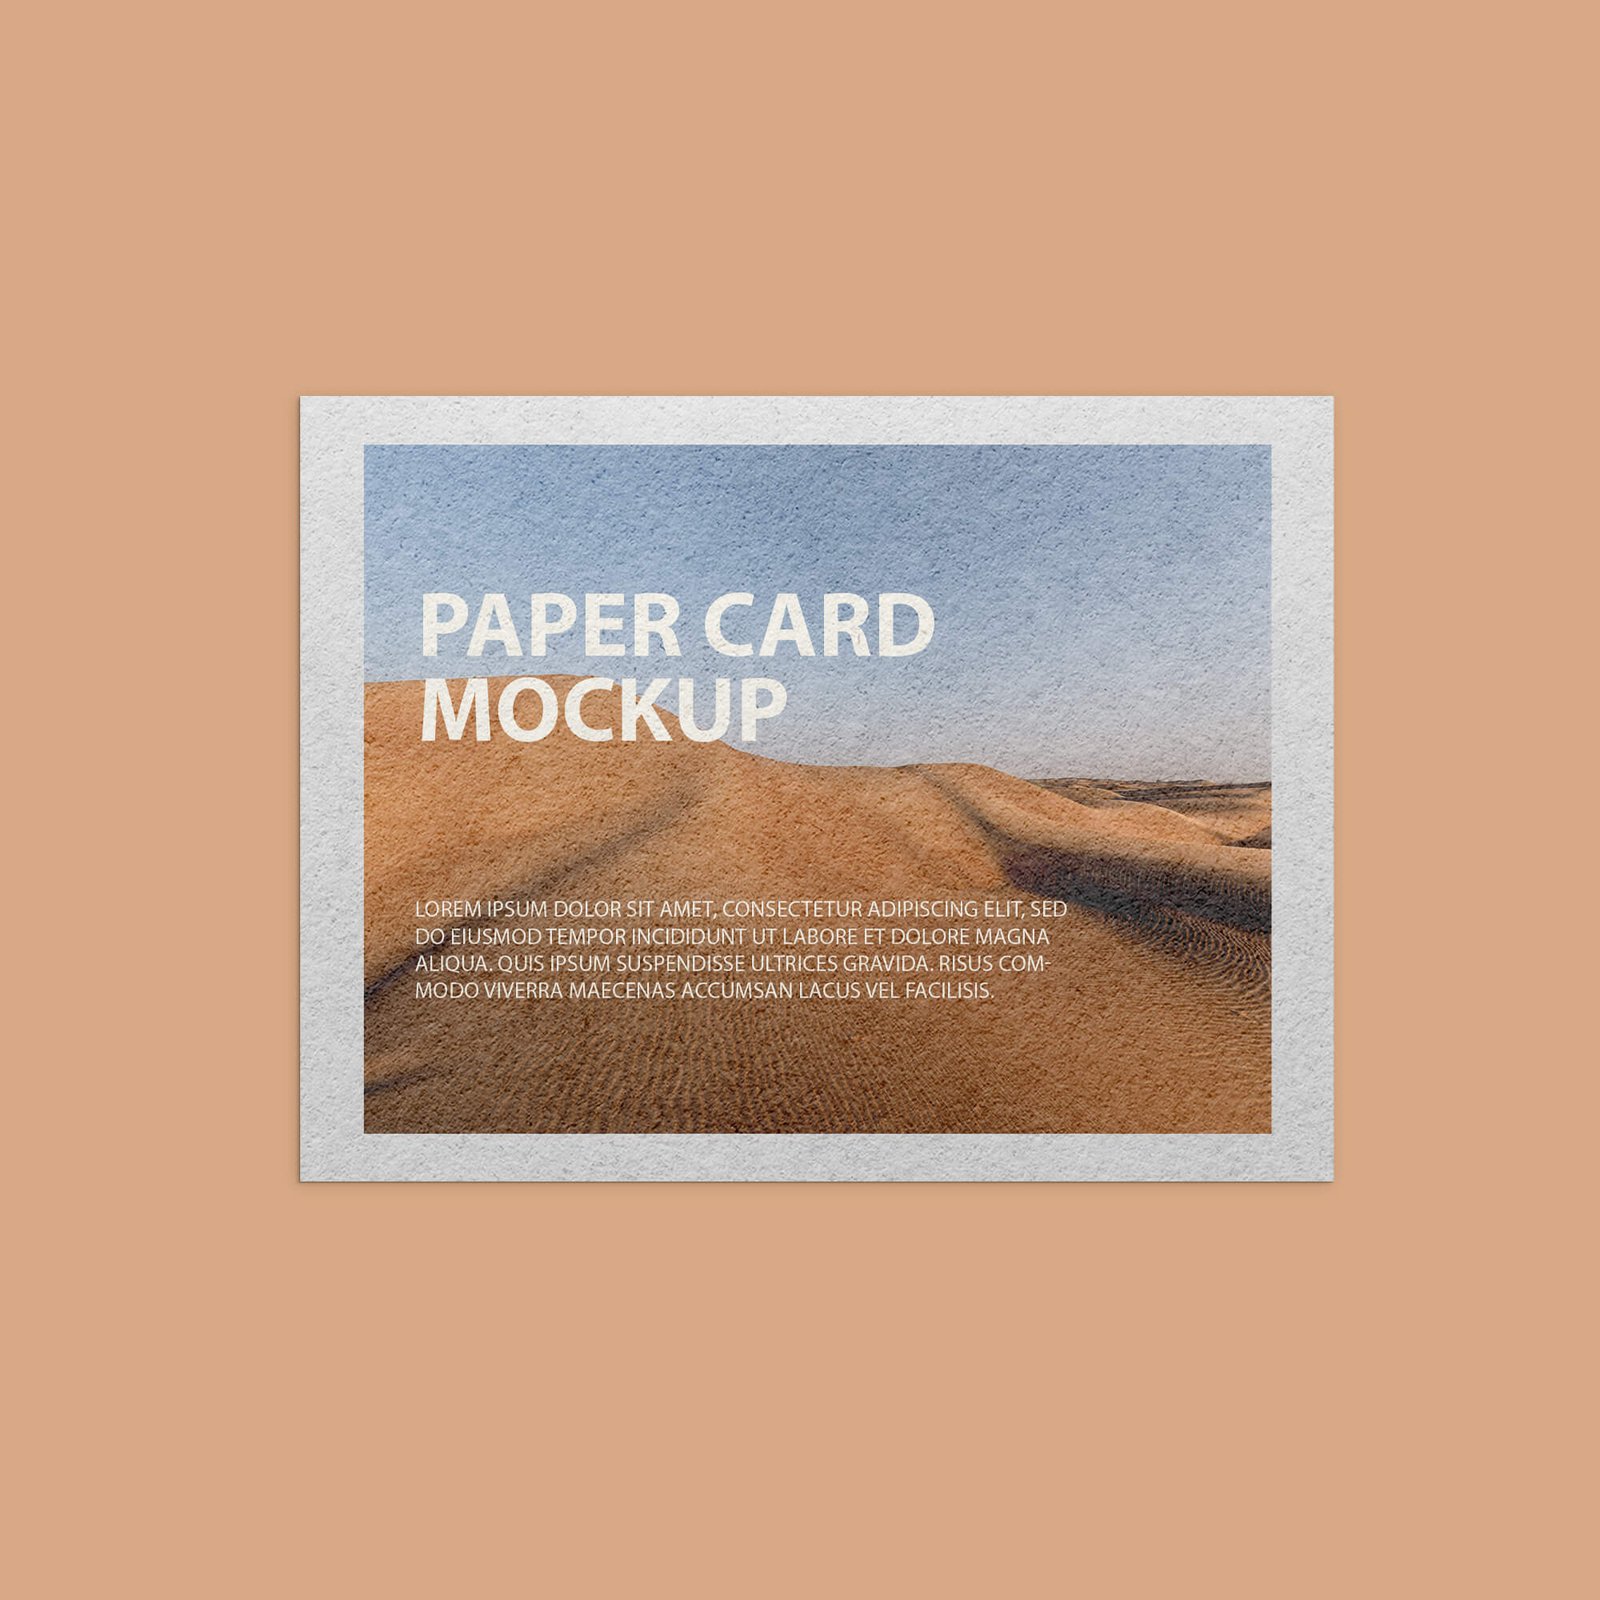 Design Paper Card Mockup PSD Template